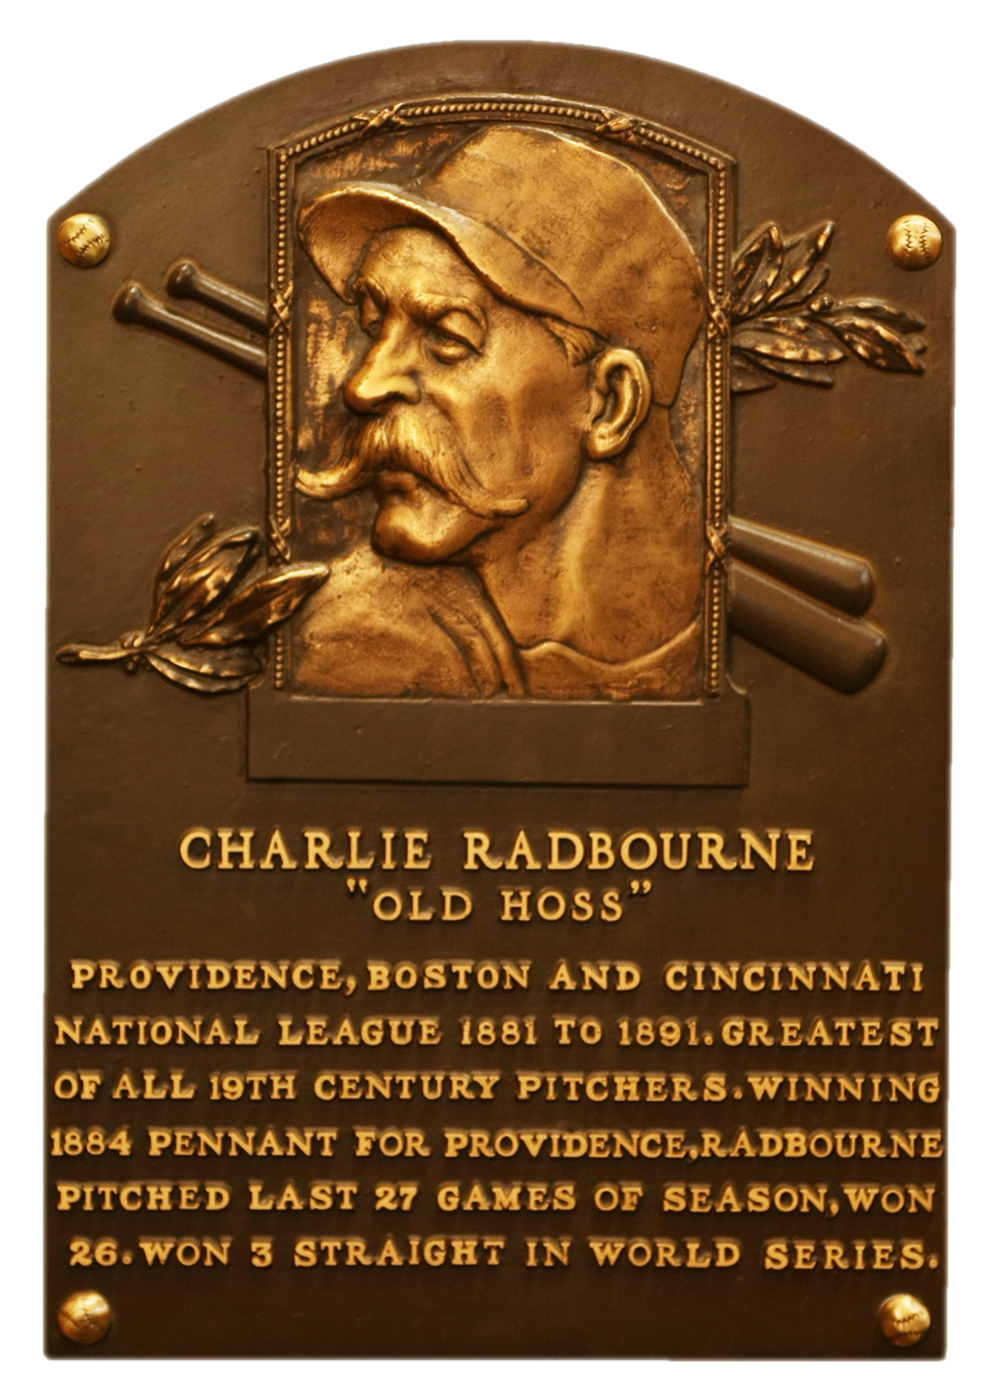 Old Hoss Radbourn Hall of Fame plaque